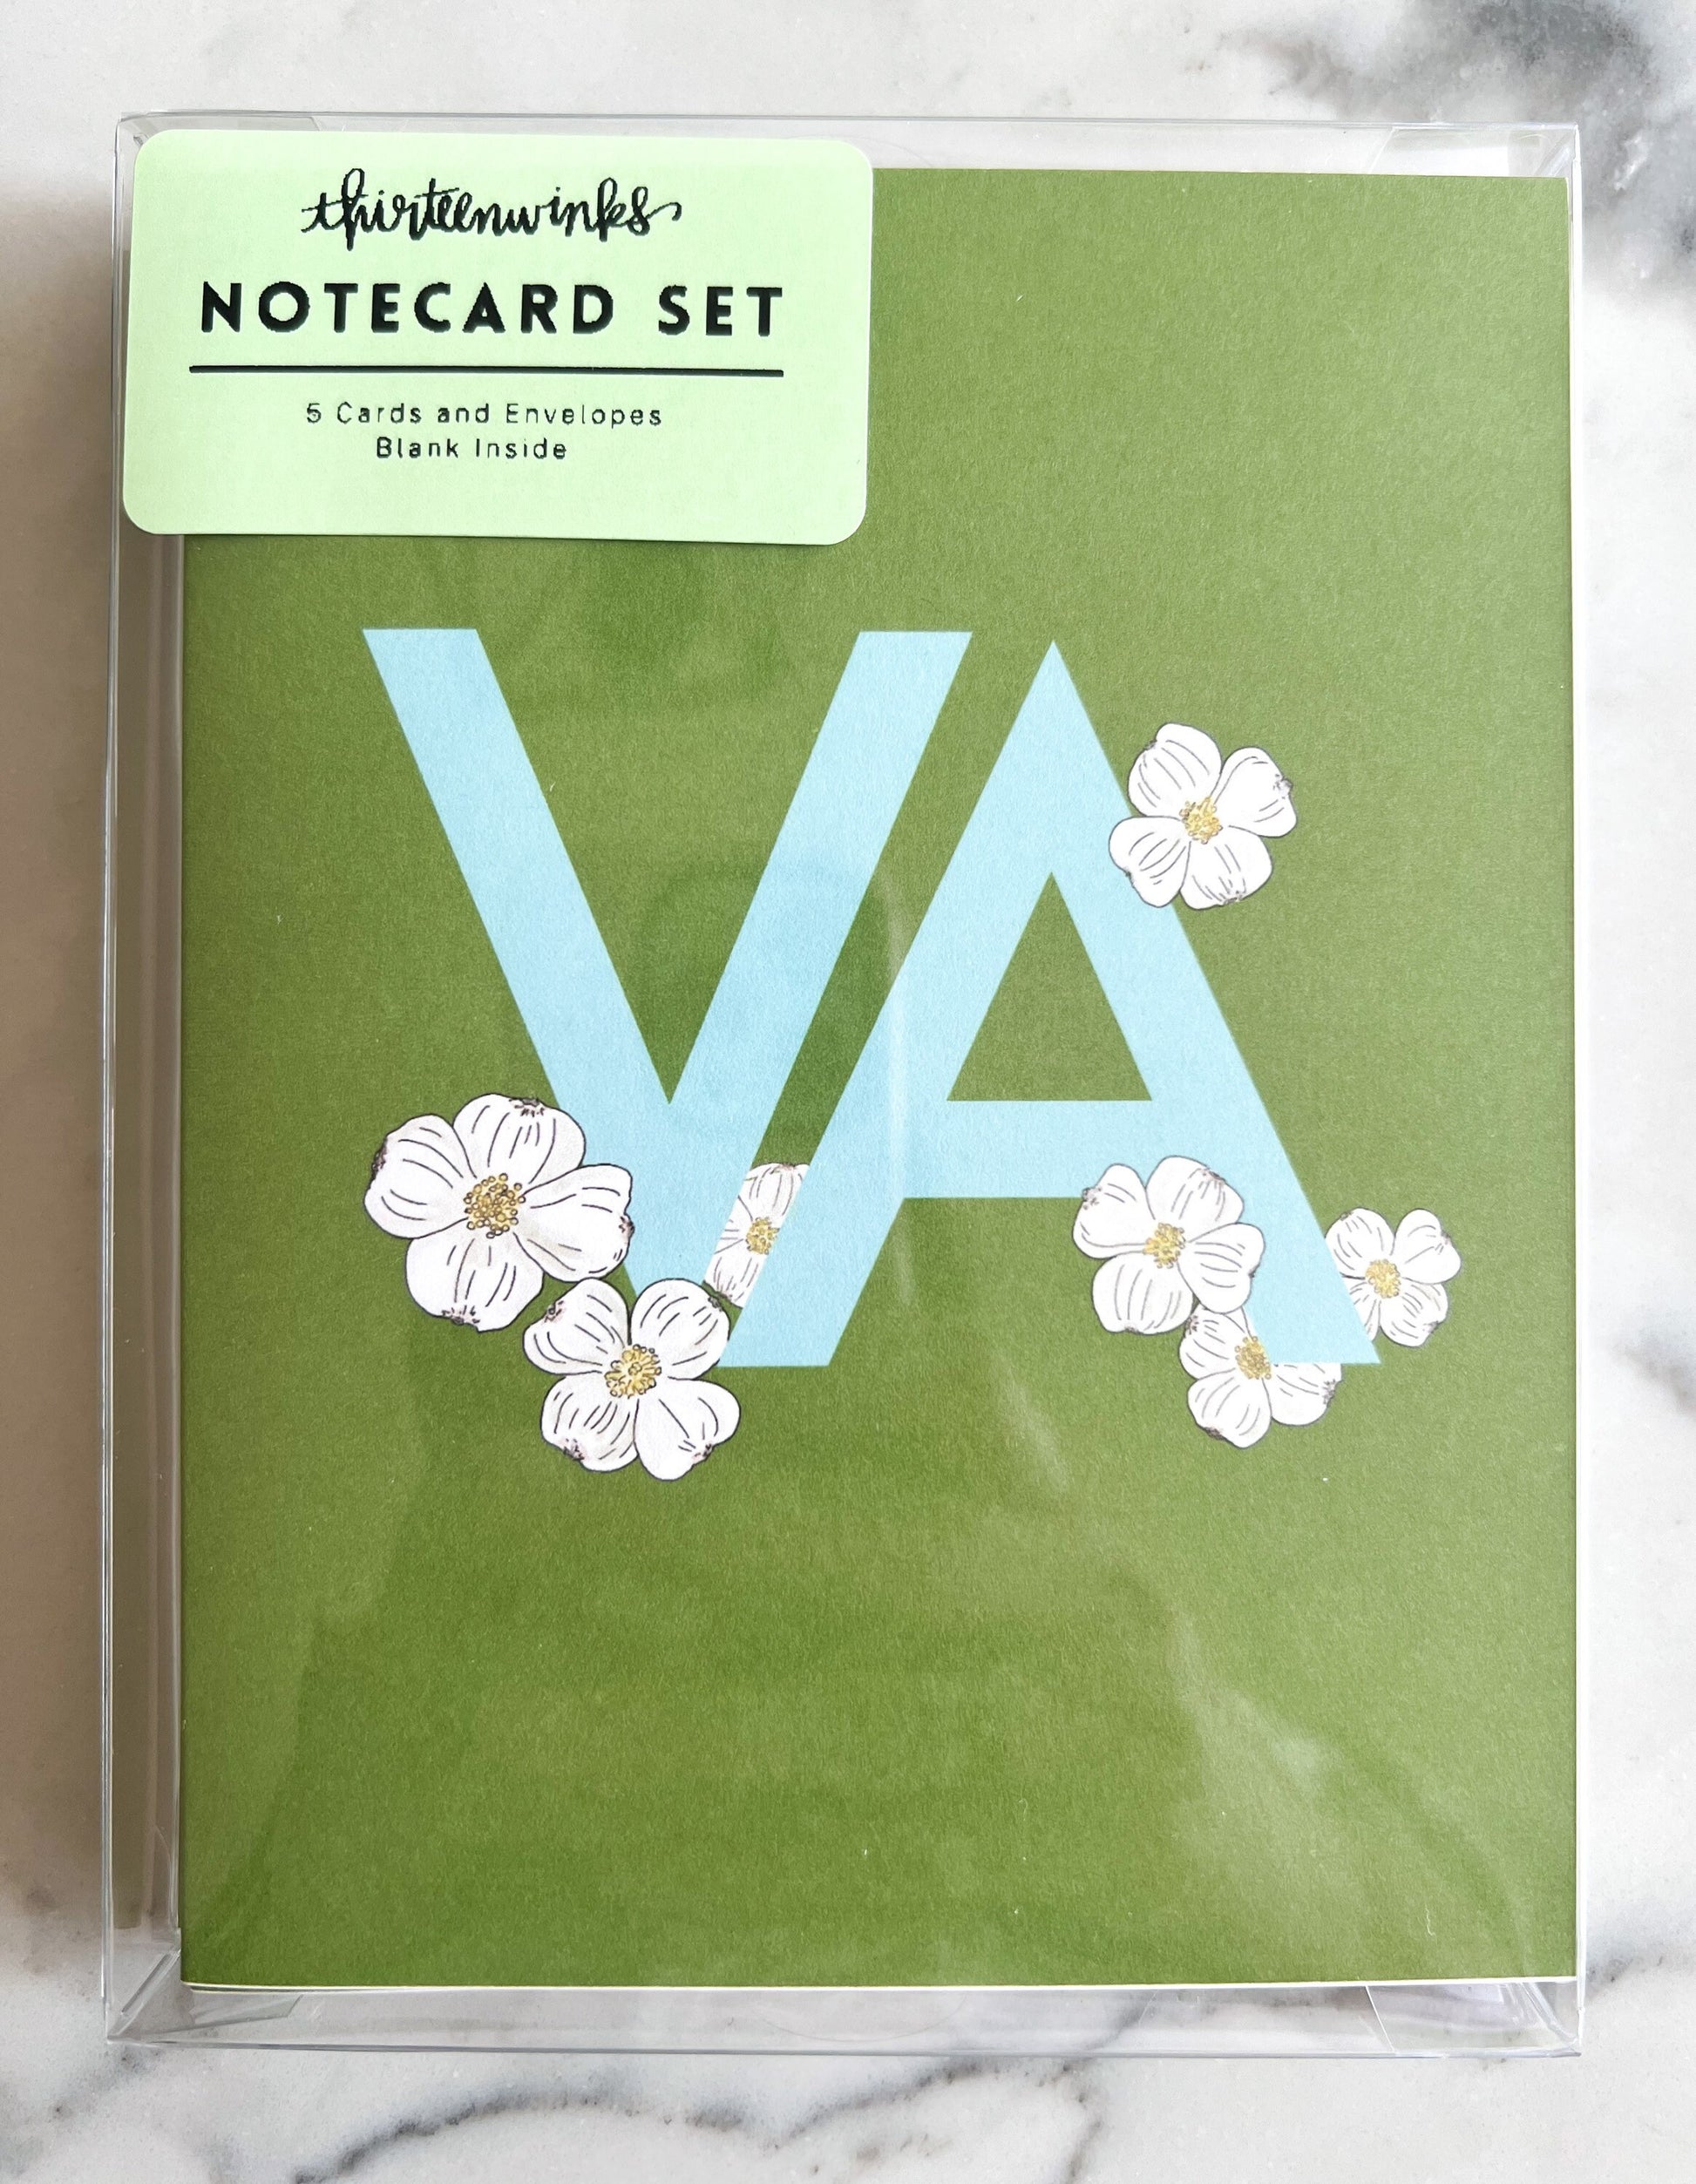 Virginia VA dogwood state flower notecard set blue and green